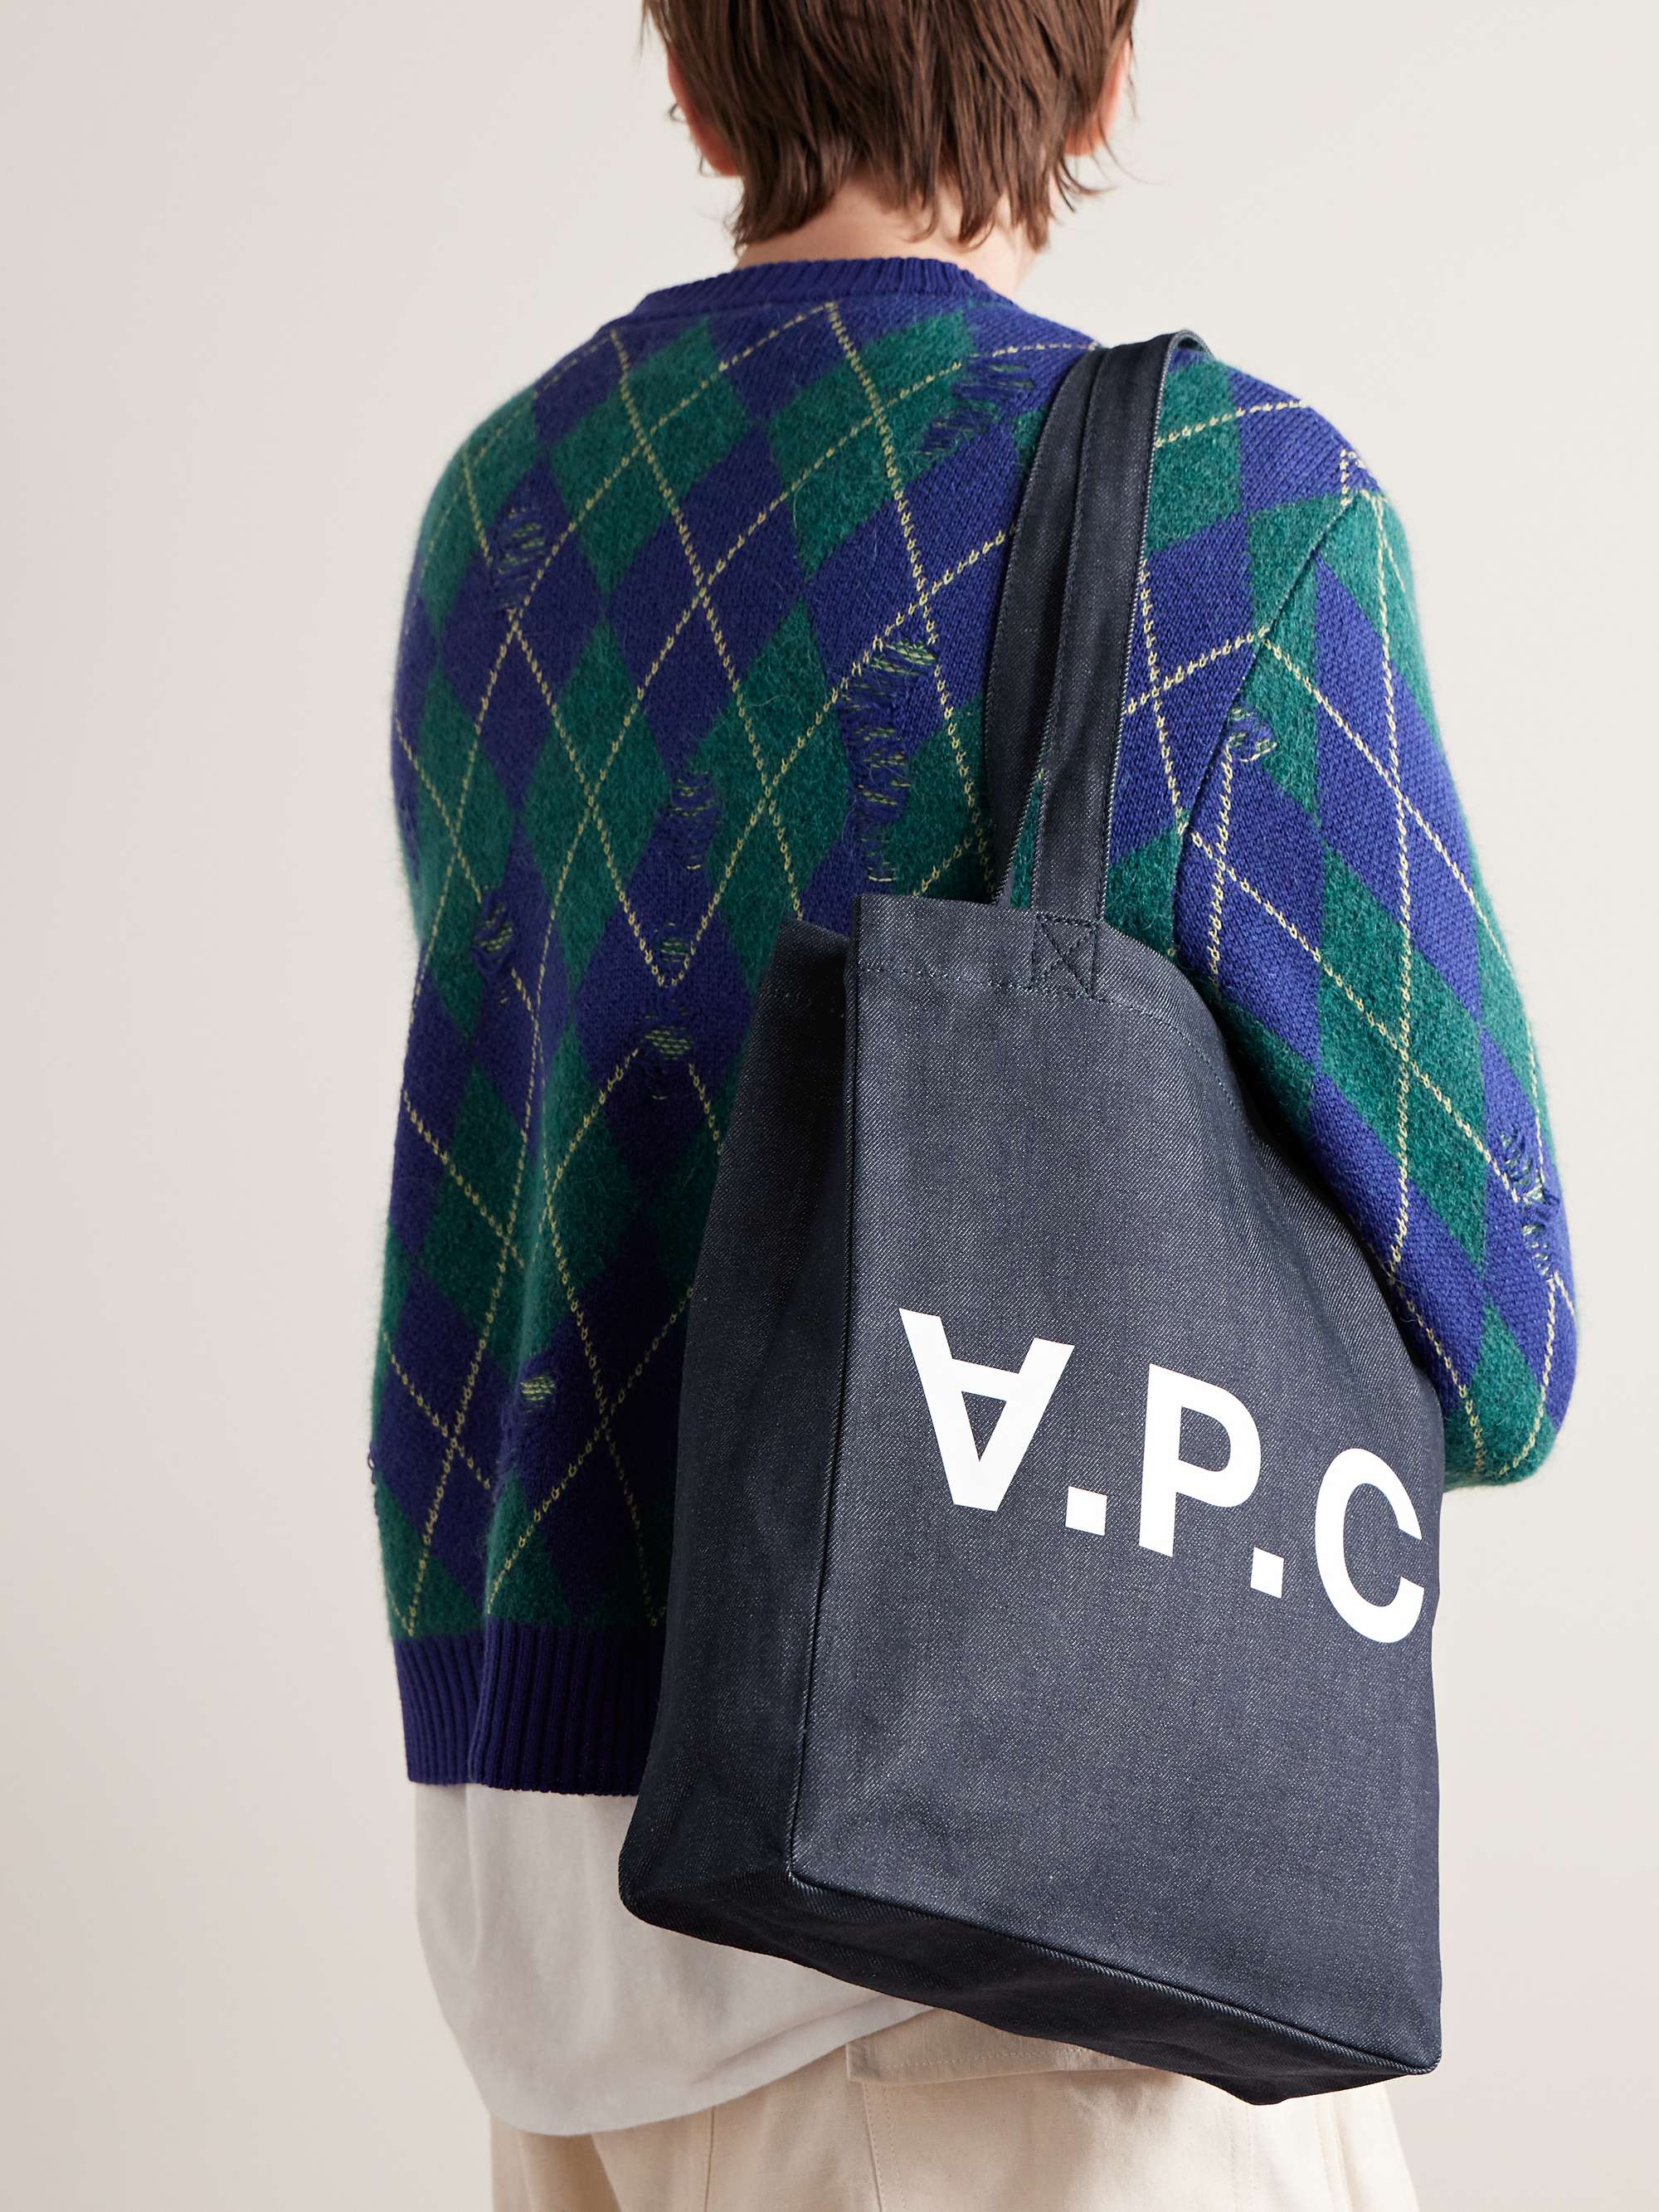 A.P.C. Laure Logo-Print Denim Tote Bag for Men | MR PORTER